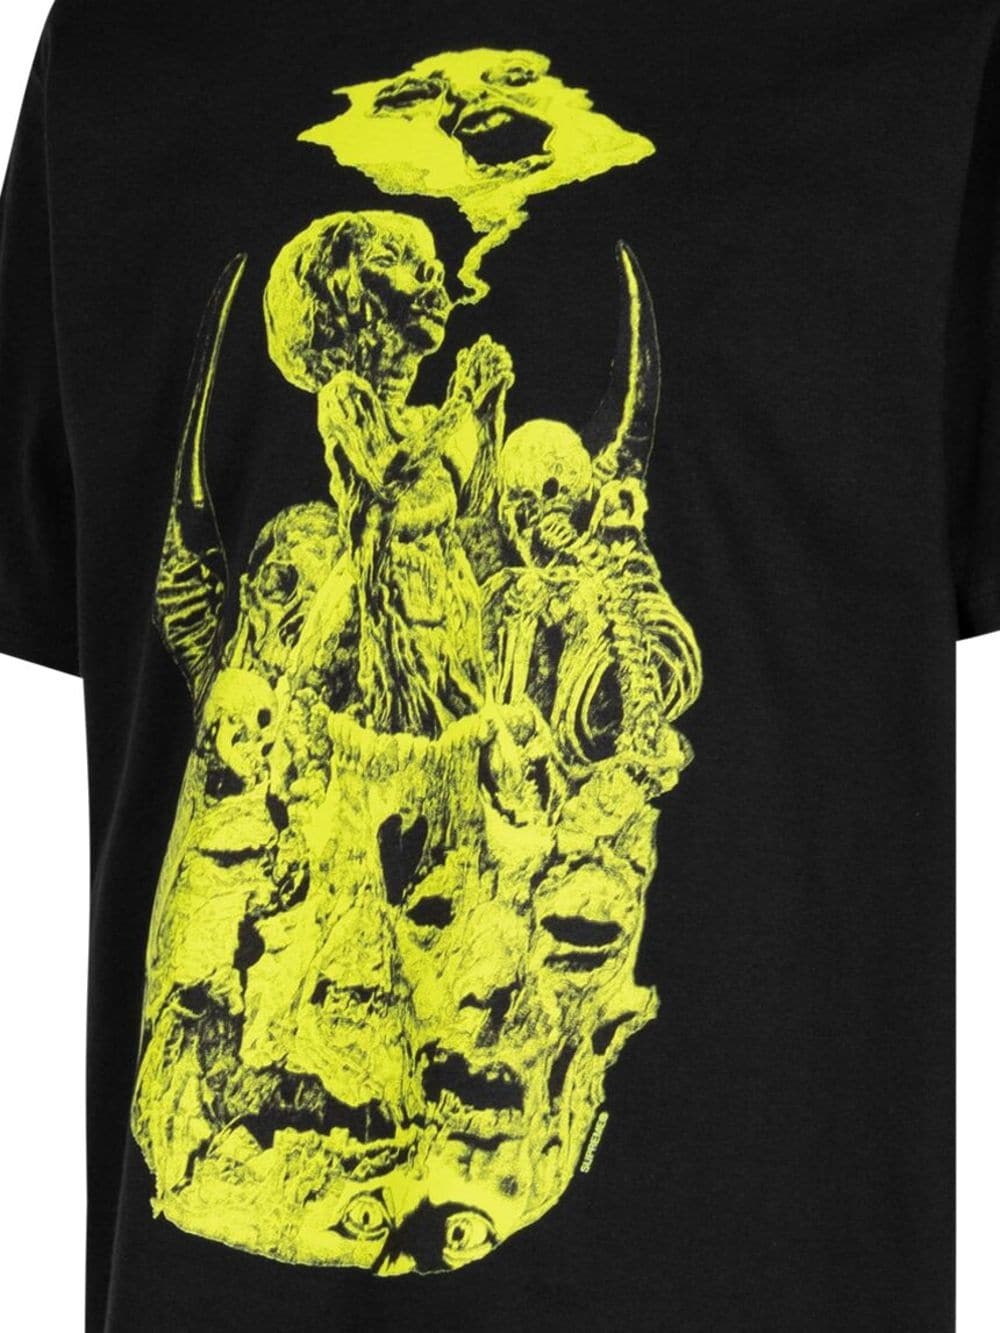 Mutants "Black" T-shirt - 2